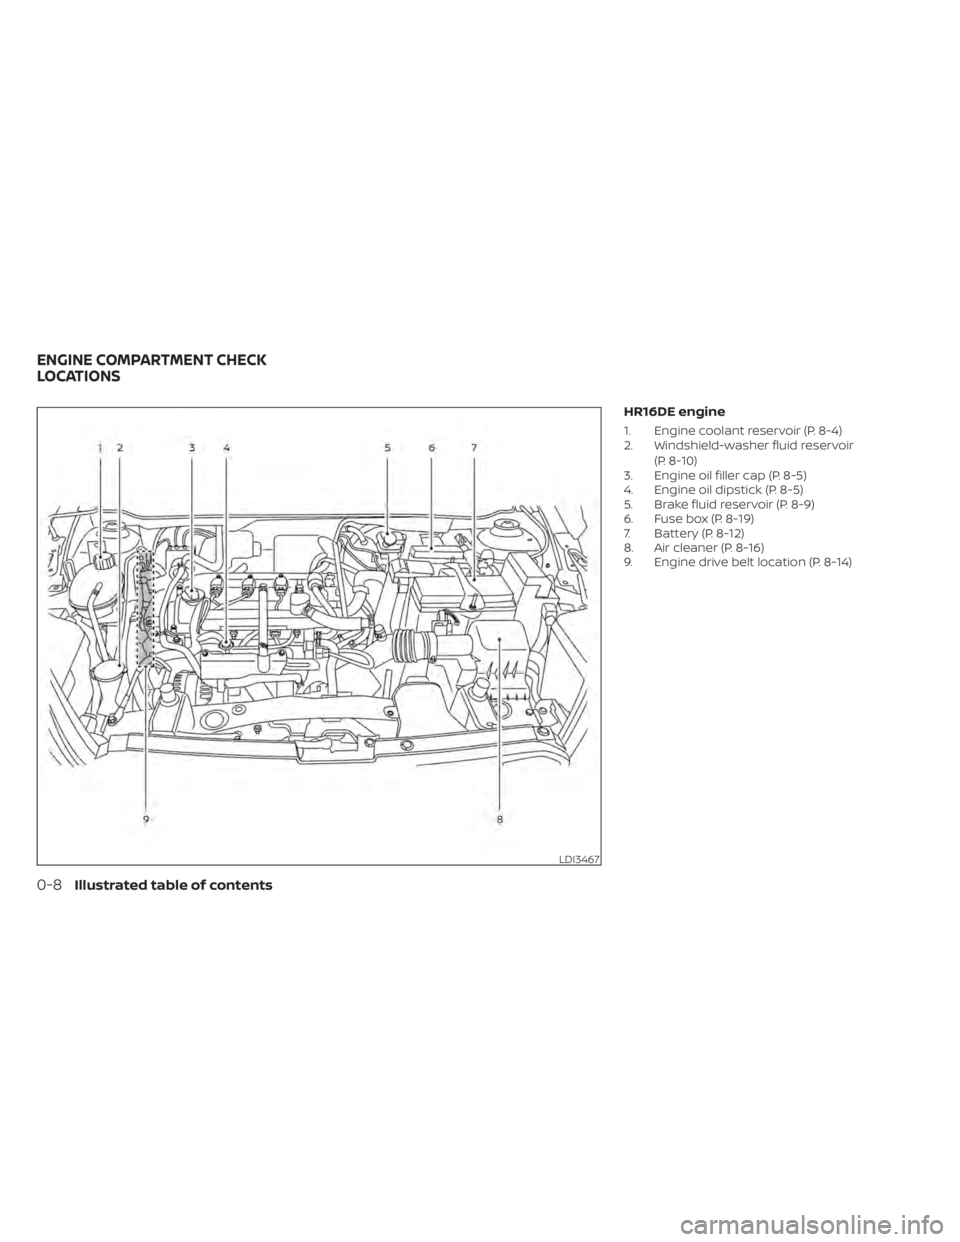 NISSAN KICKS 2021 User Guide HR16DE engine
1. Engine coolant reservoir (P. 8-4)
2. Windshield-washer fluid reservoir(P. 8-10)
3. Engine oil filler cap (P. 8-5)
4. Engine oil dipstick (P. 8-5)
5. Brake fluid reservoir (P. 8-9)
6. 